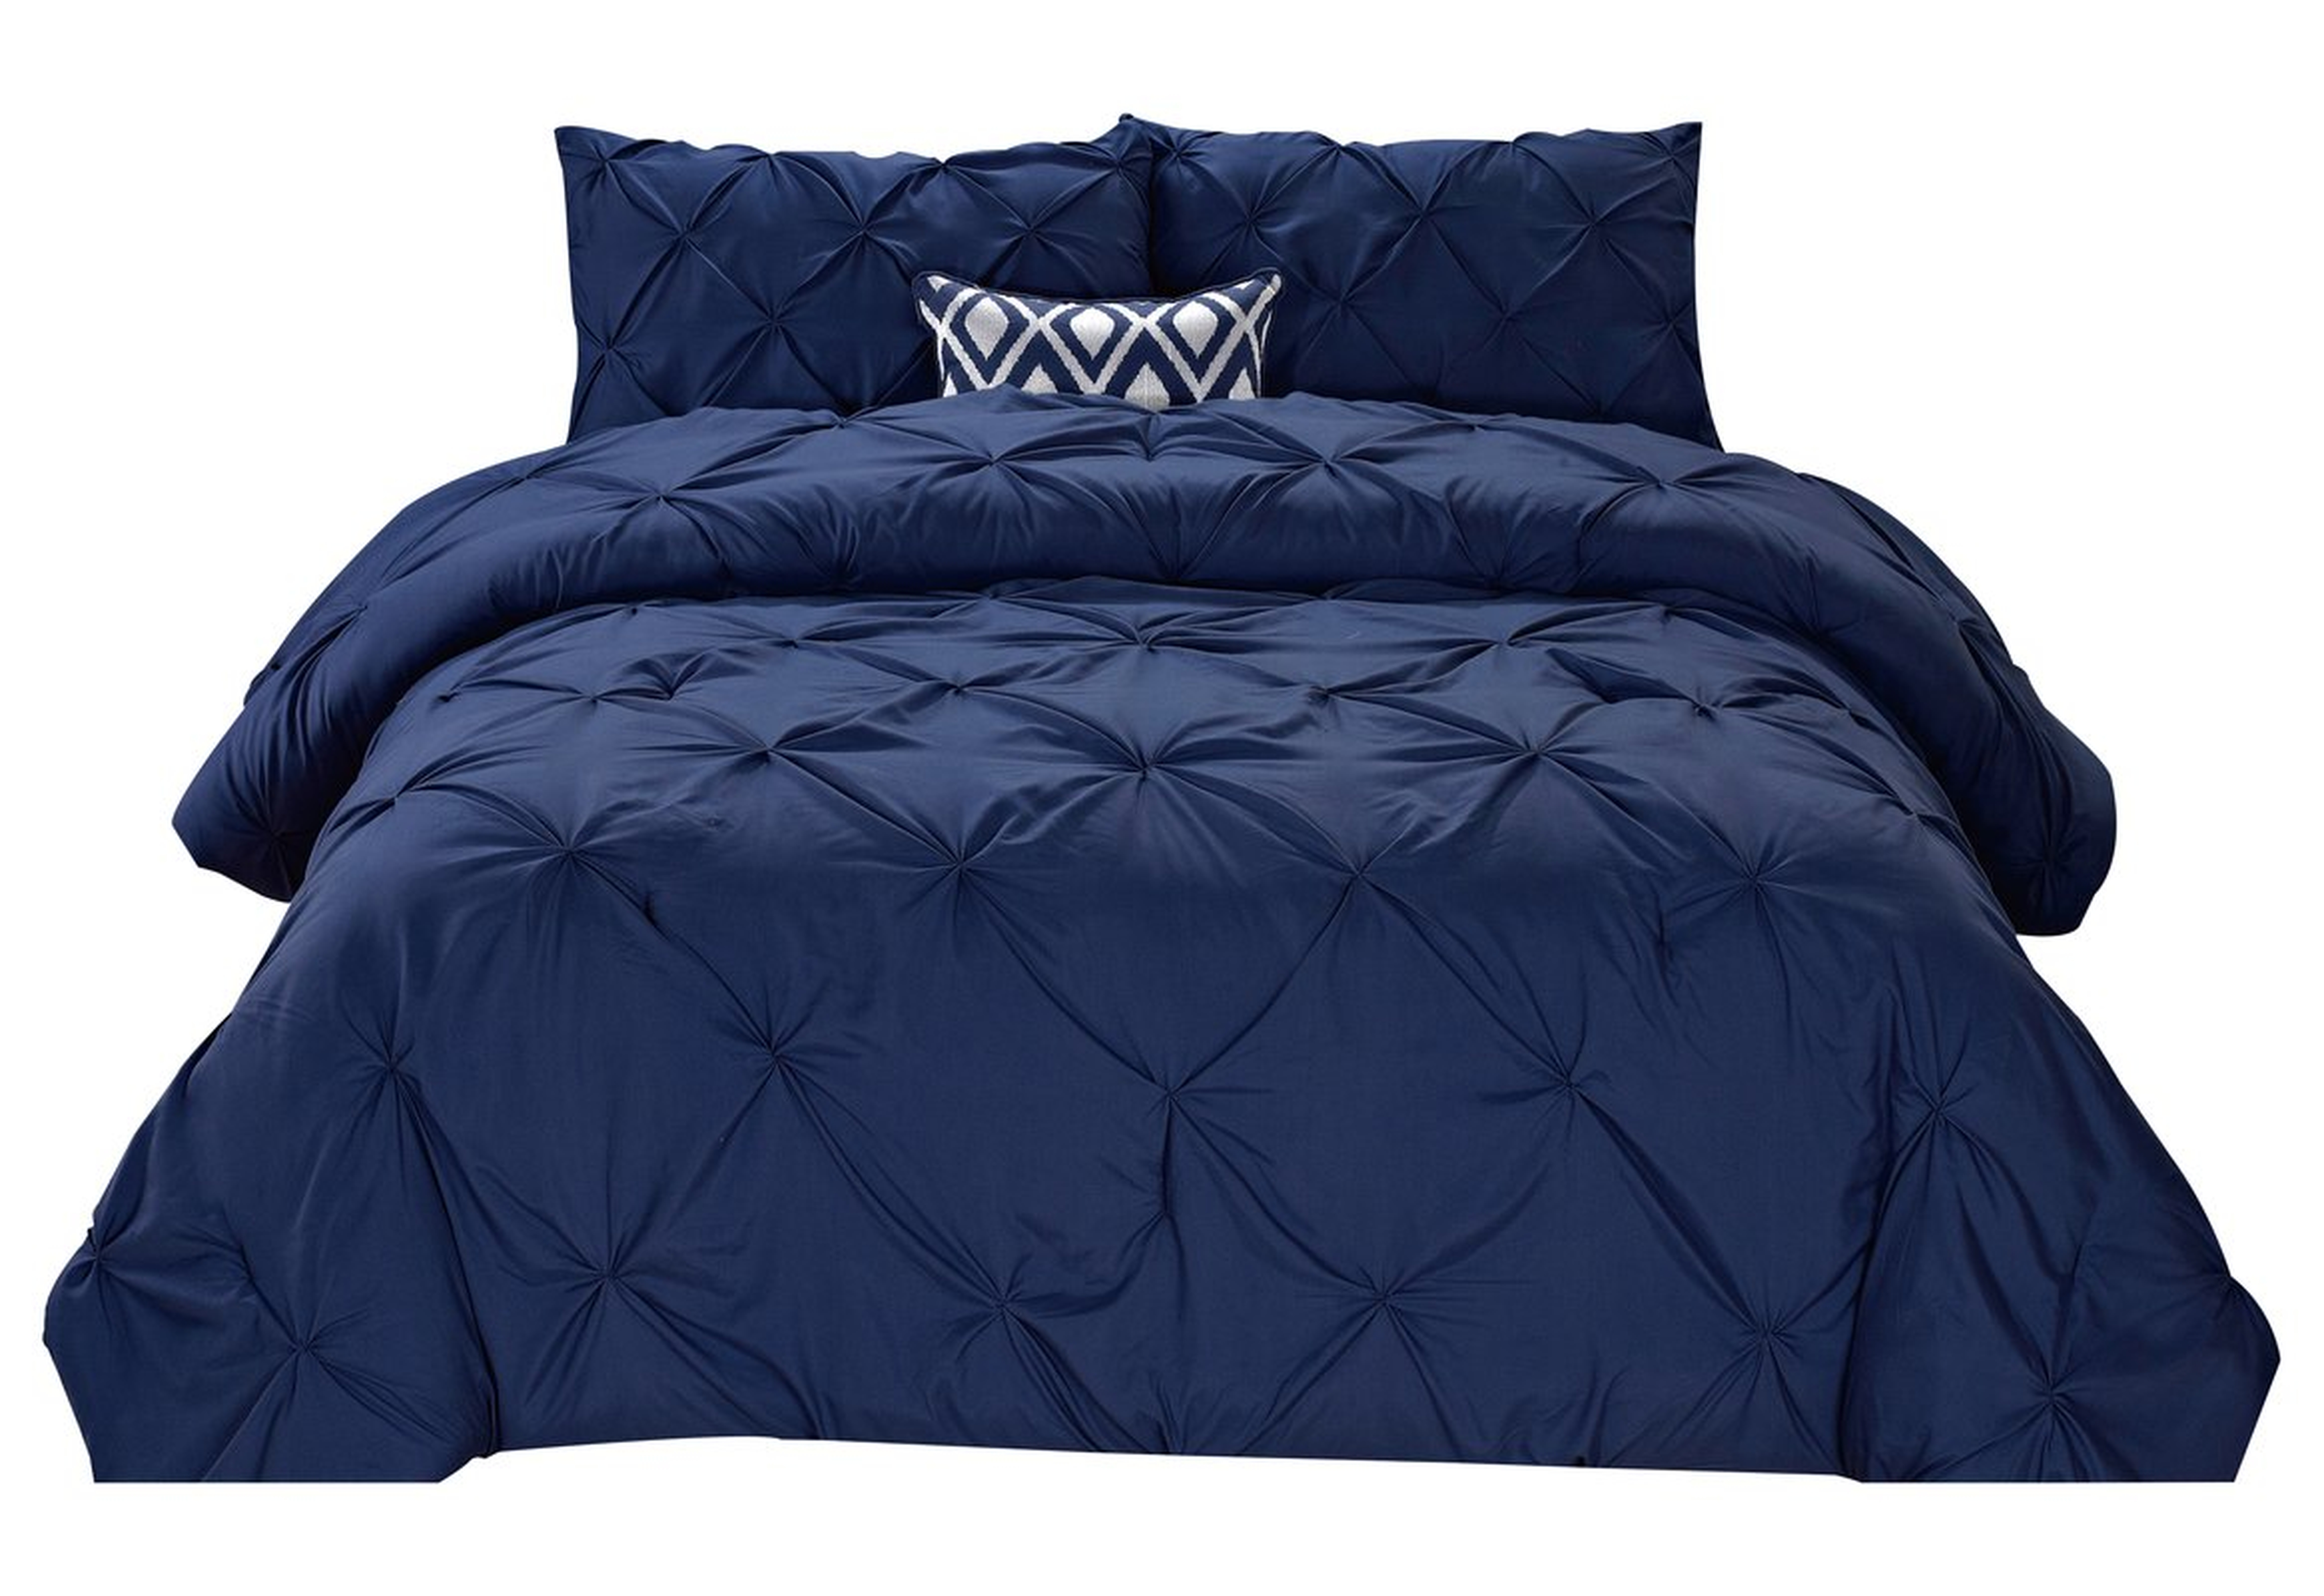 Fulgham Comforter Set - Wayfair